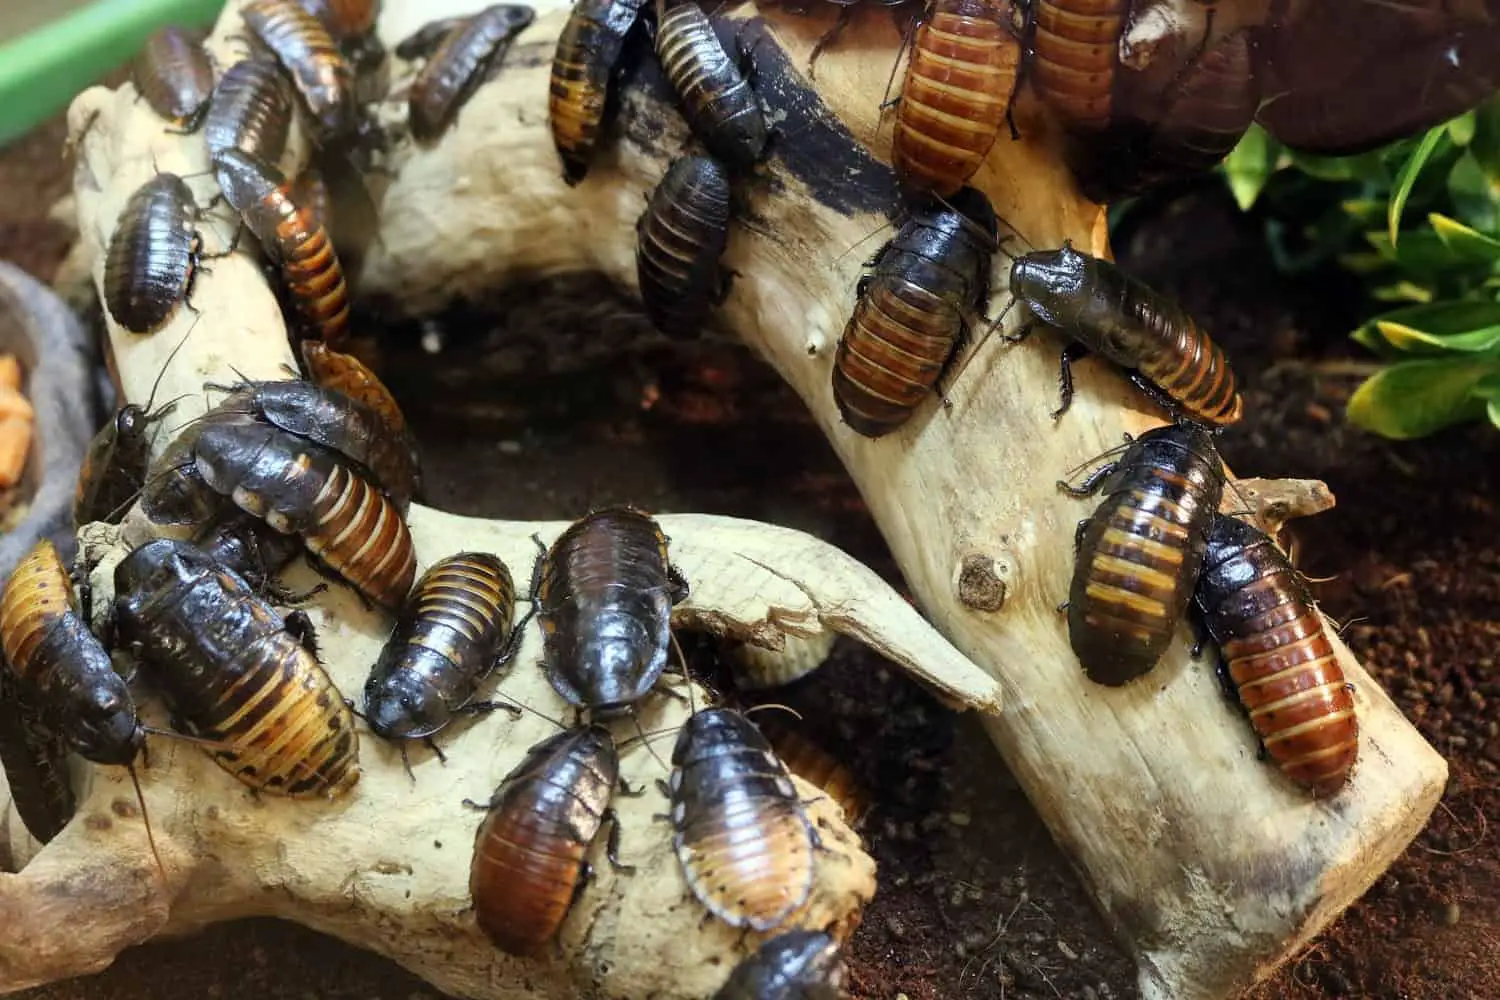 Madagascar hissing cockroach colony